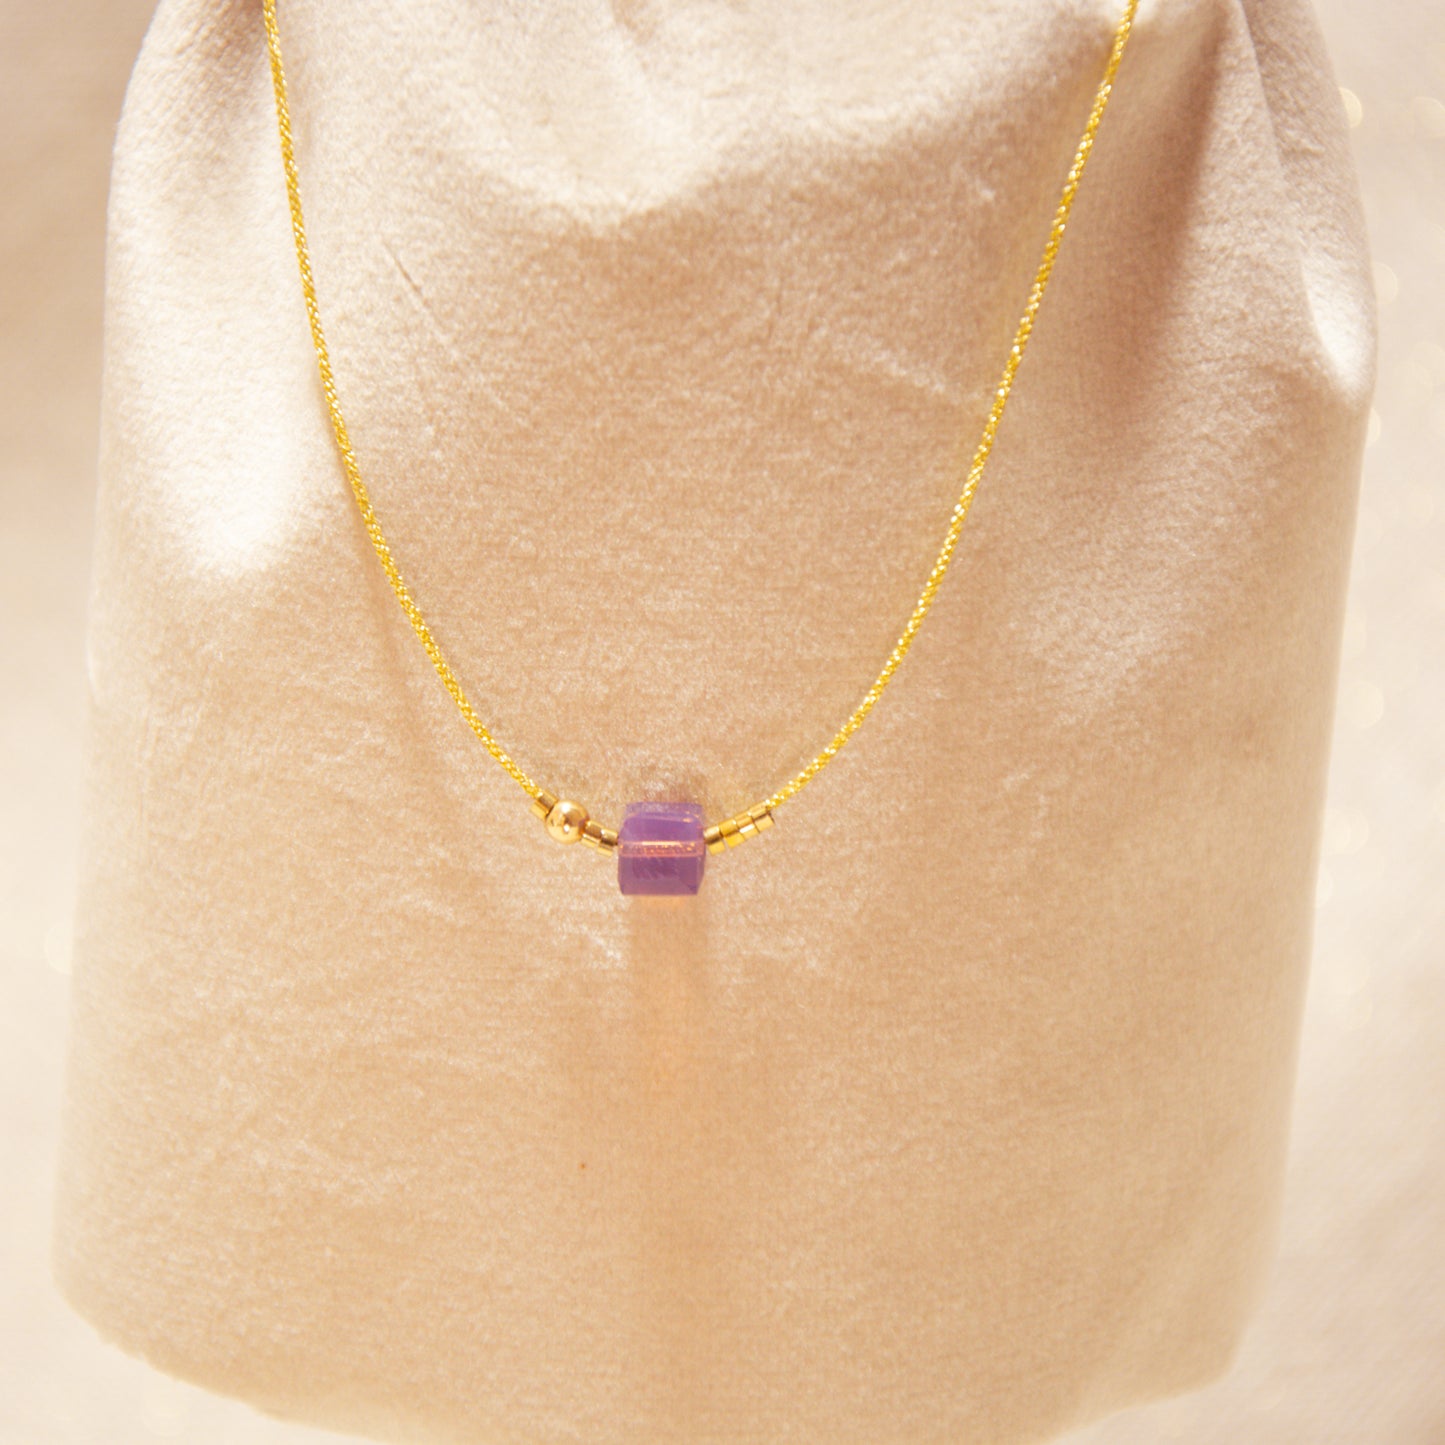 Japanese Silk Necklace - Swarovski Crystal